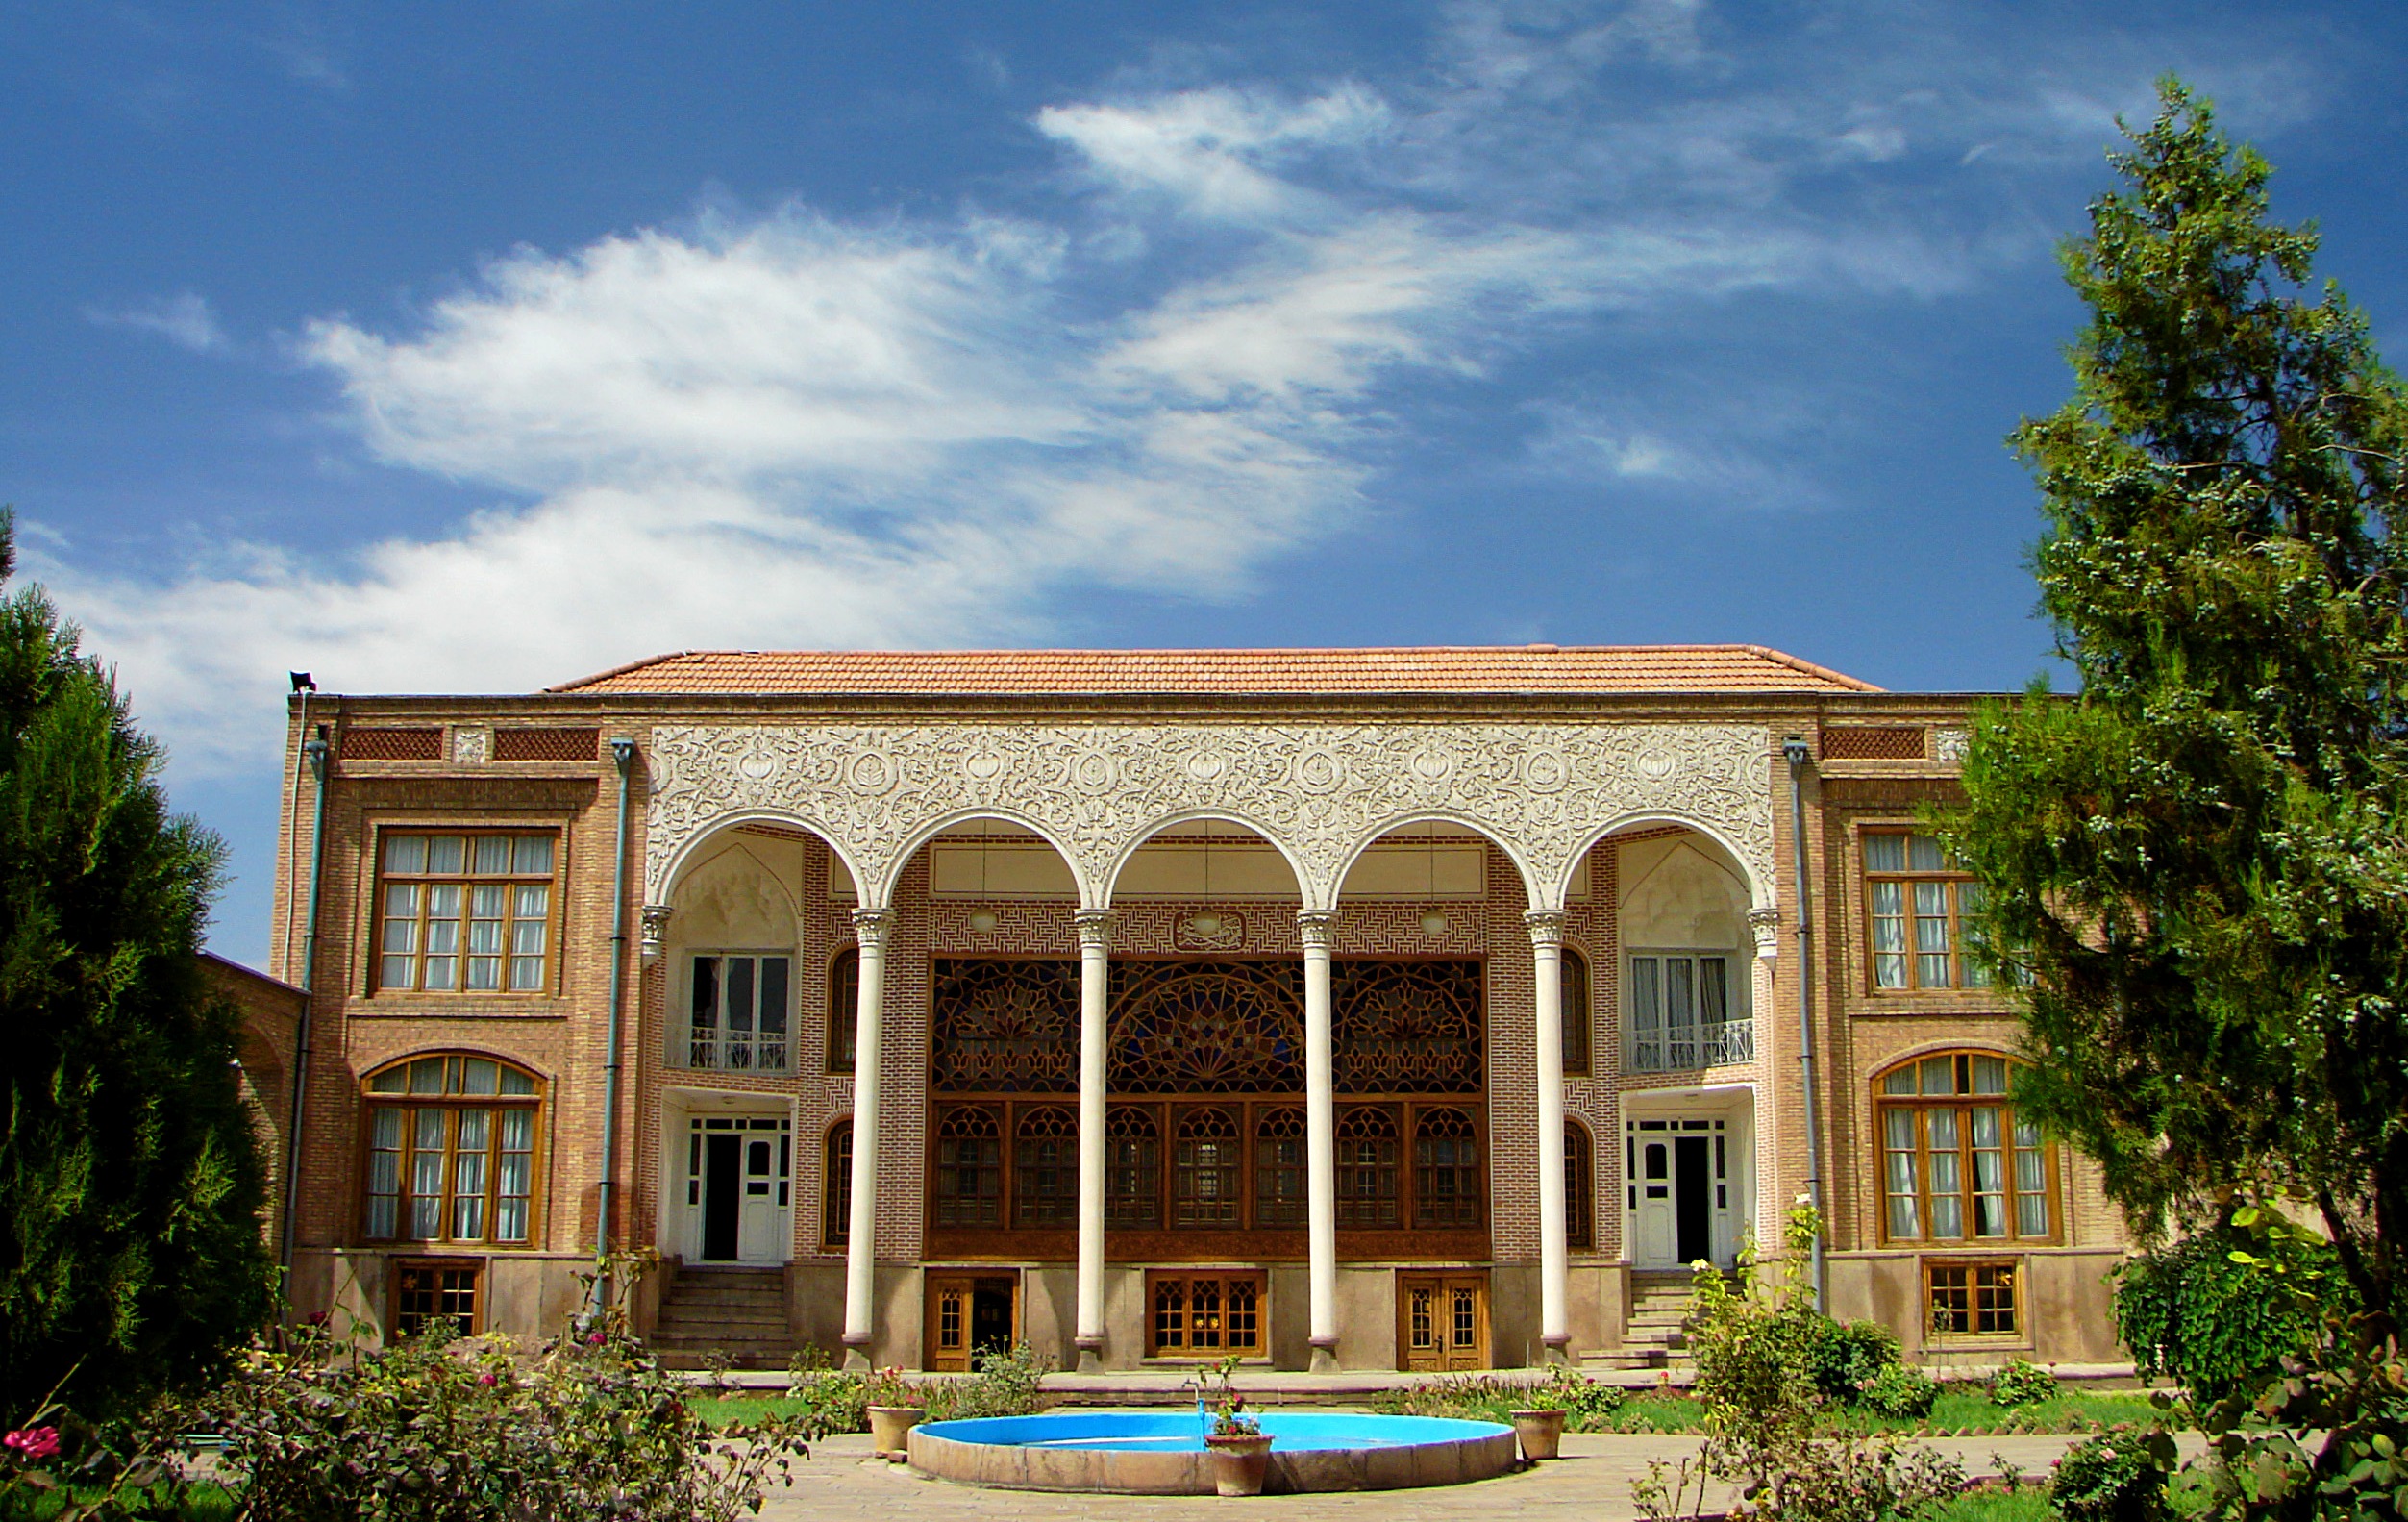 Behnam%27s_House%2C_Sahand_University_of_Technology%2C_Tabriz%2C_Azerbaijan%2C_Iran%2C_08-19-2006.jpg